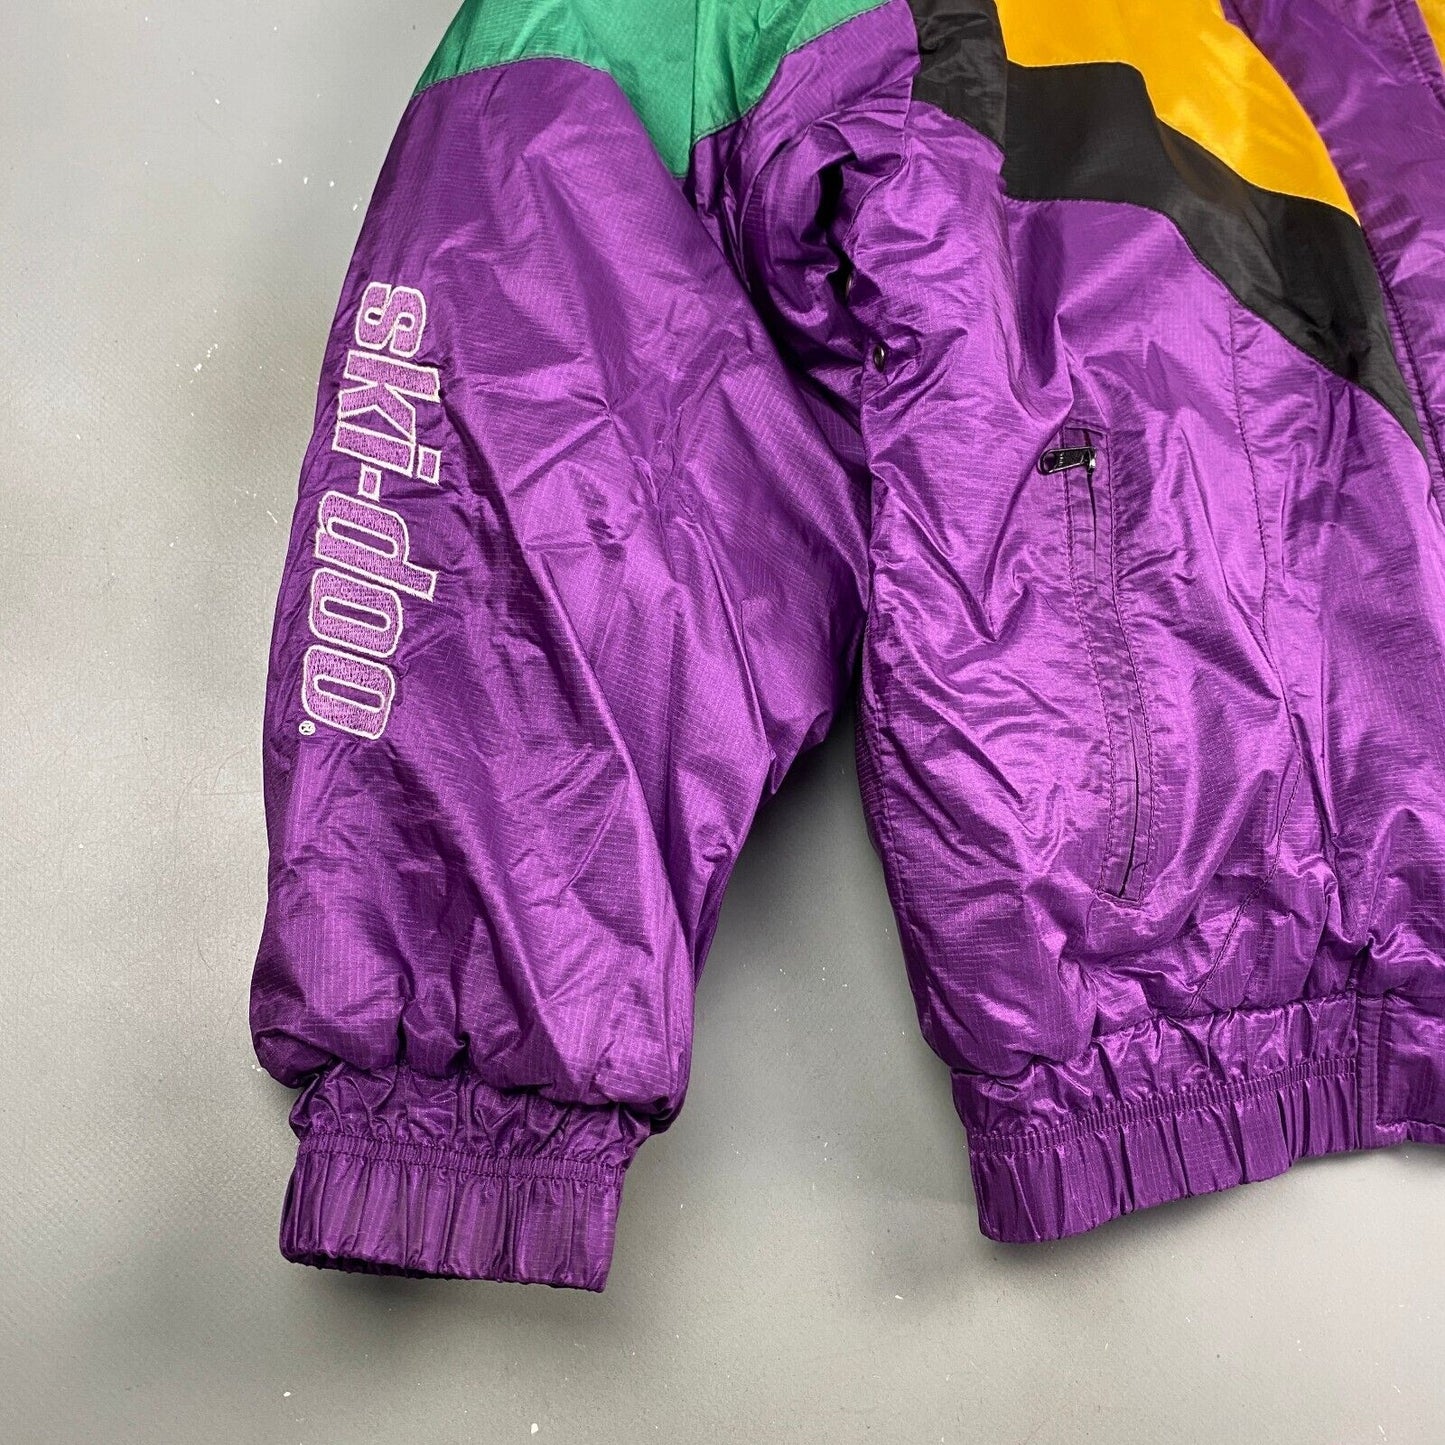 VINTAGE 90s Ski-Doo Rotax Performance Insulated Down Jacket sz Medium Adult